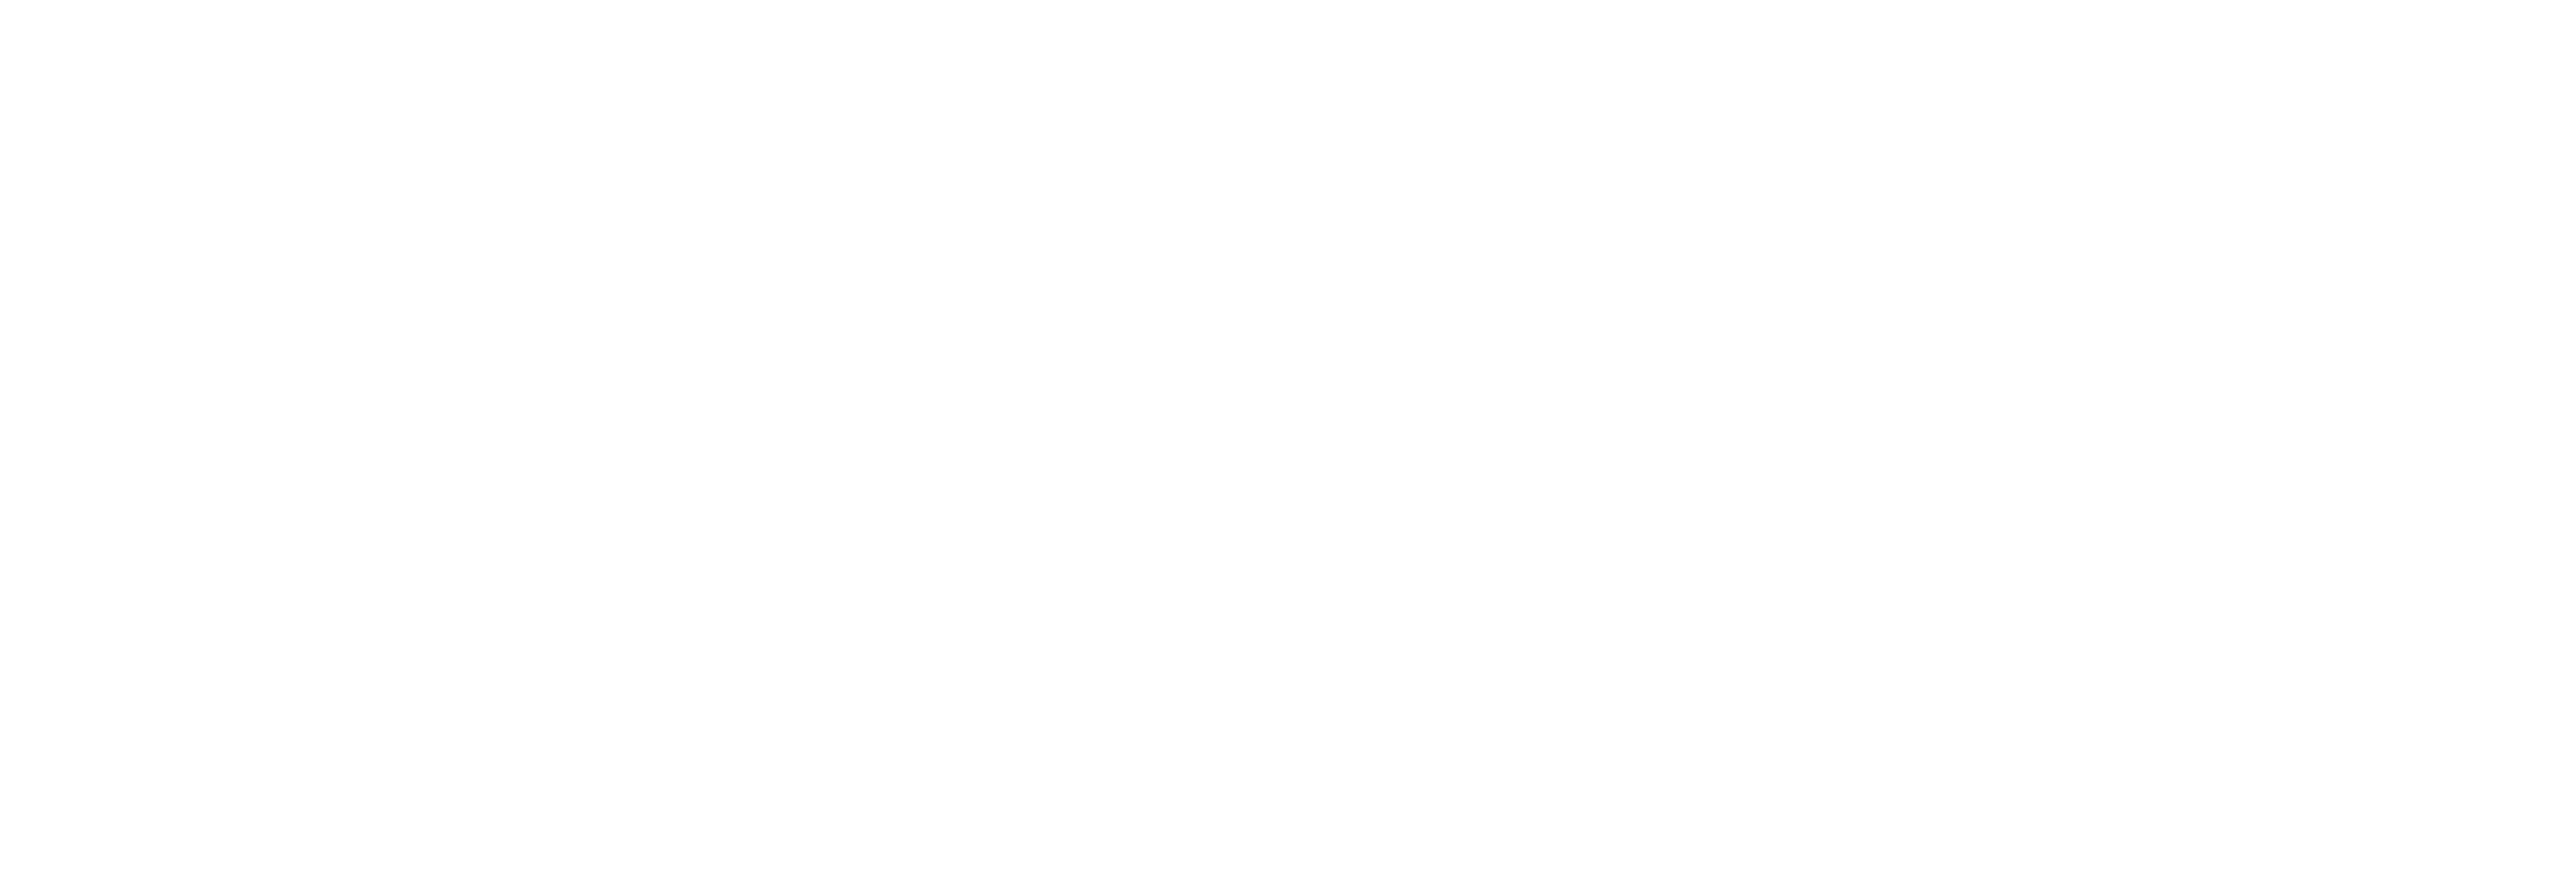 Mills & Company